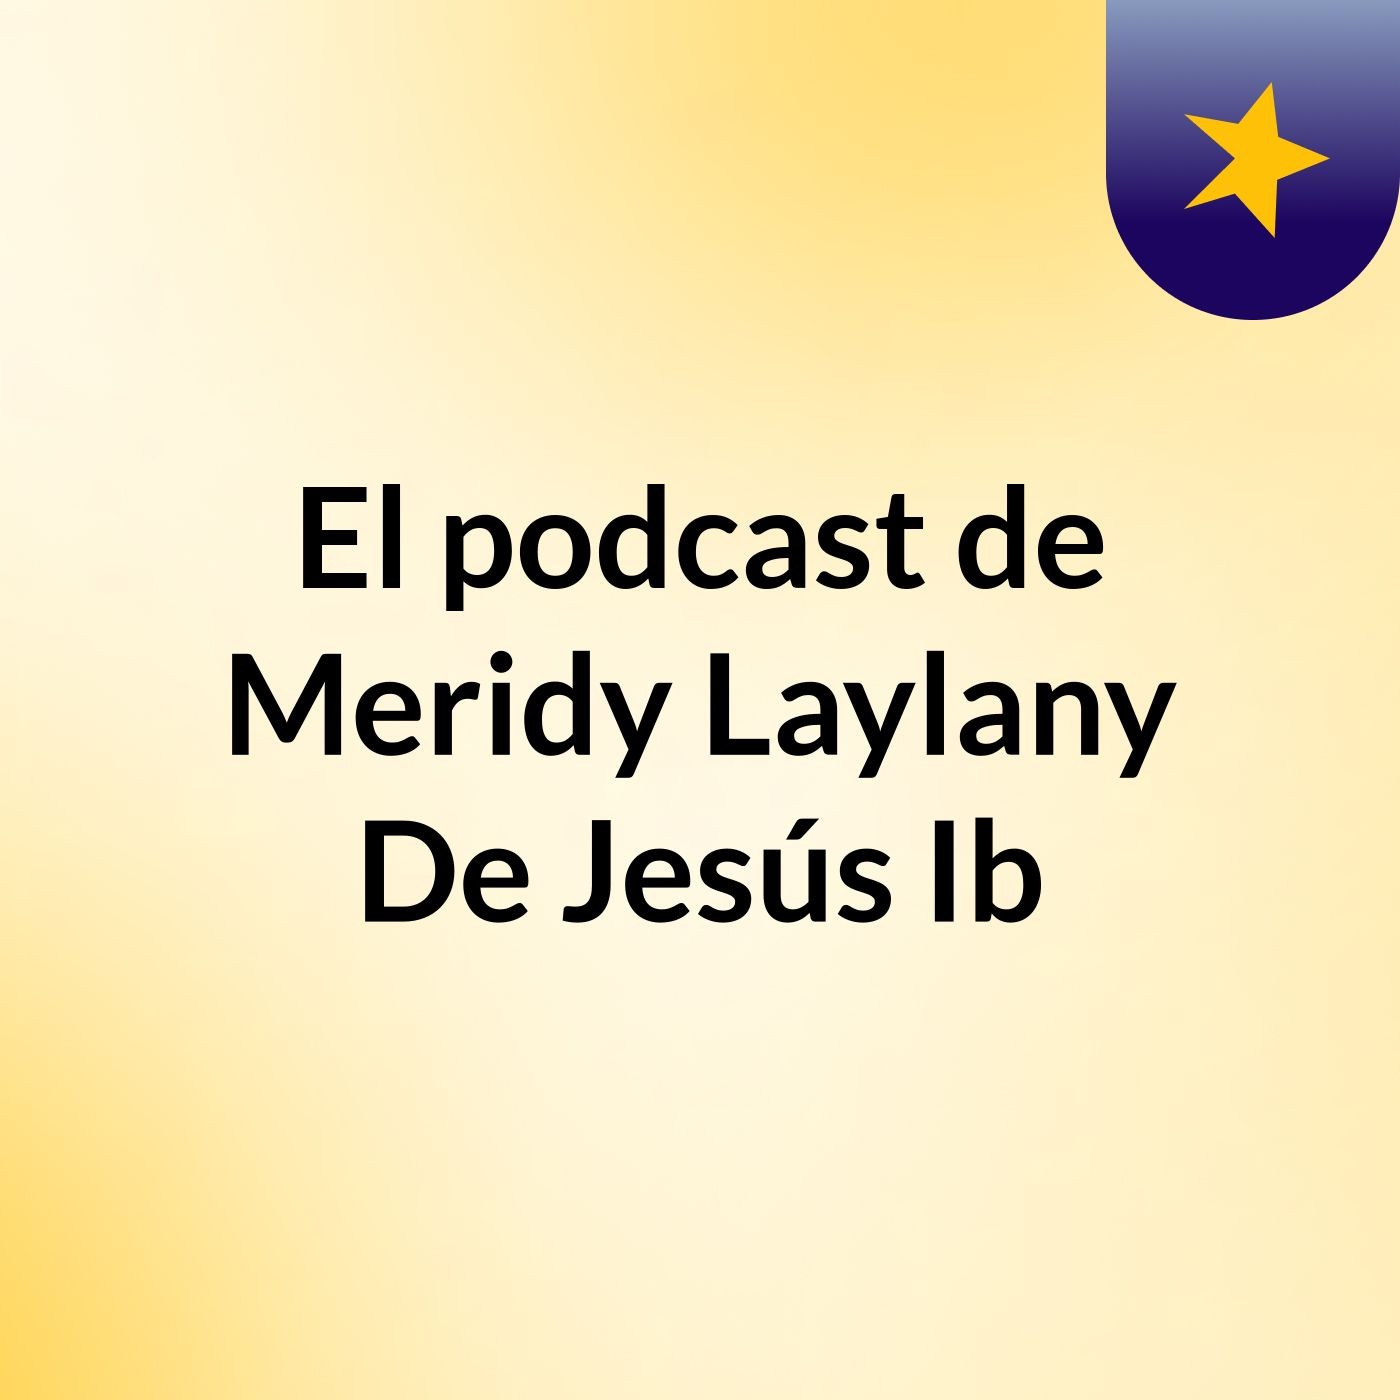 El podcast de Meridy Laylany De Jesús Ib